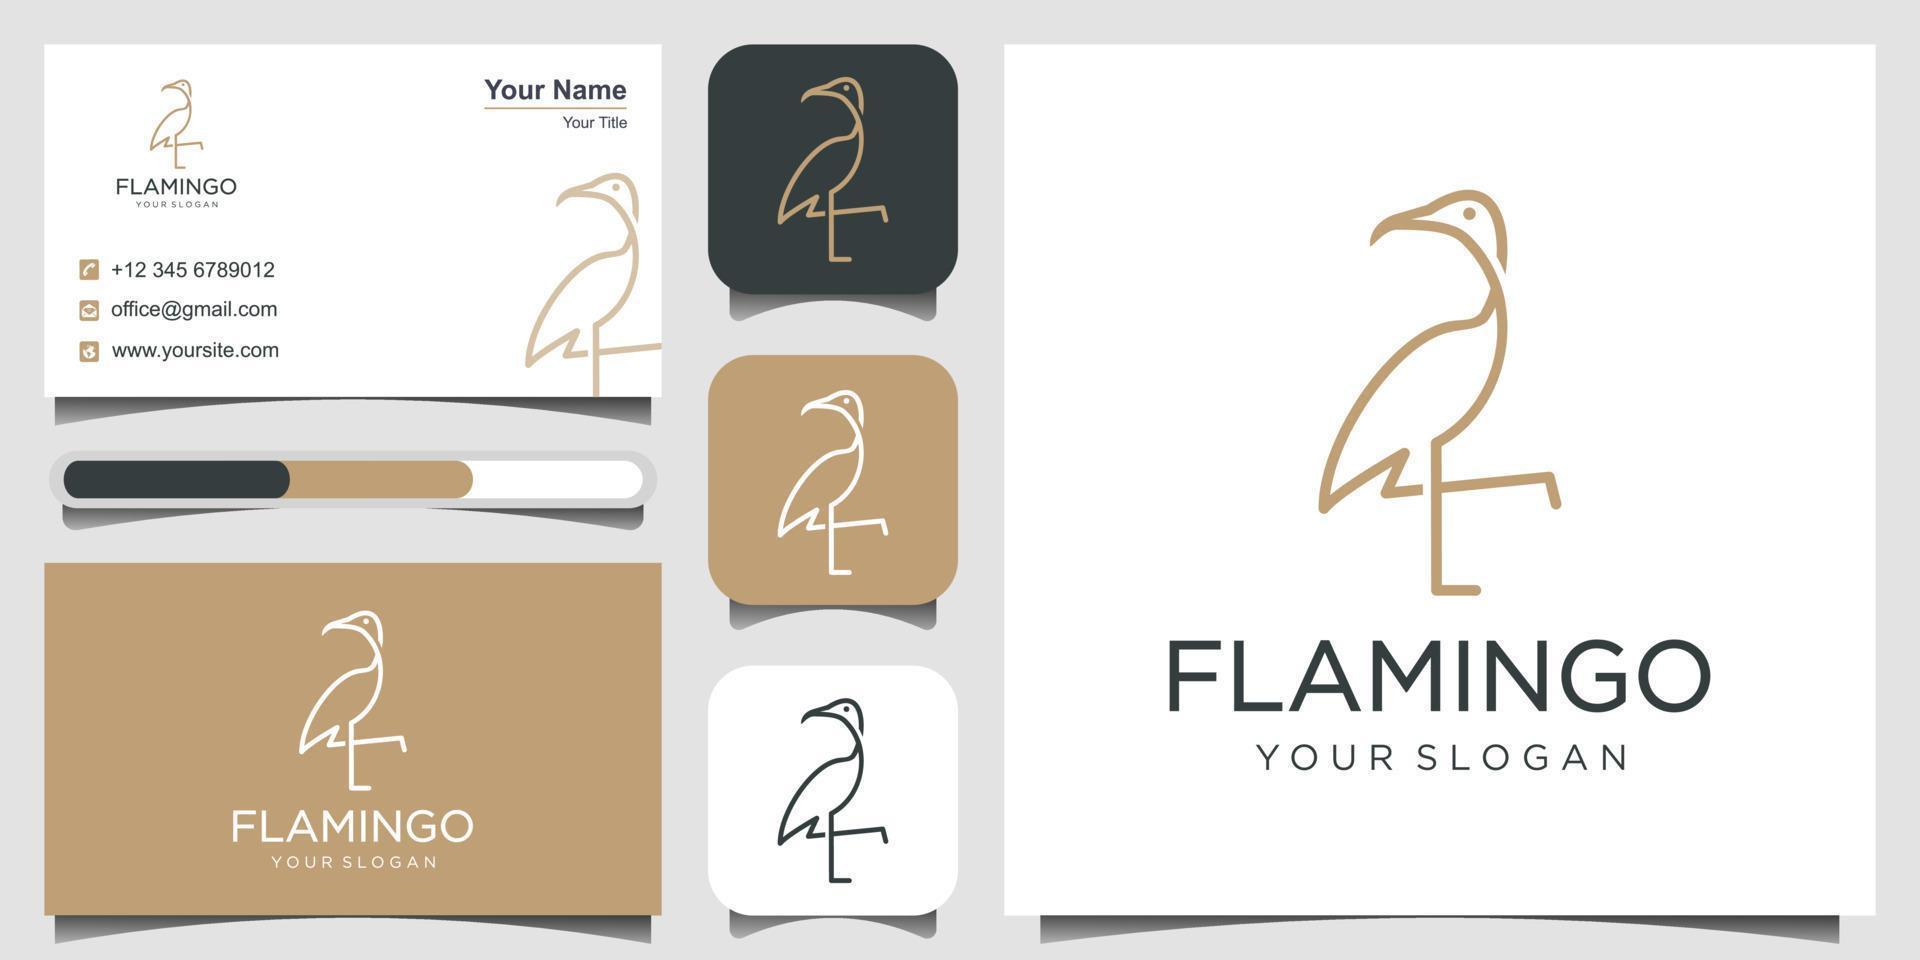 Flamingo line logo design. logo design, 3 favicons and business card Premium Vector. vector